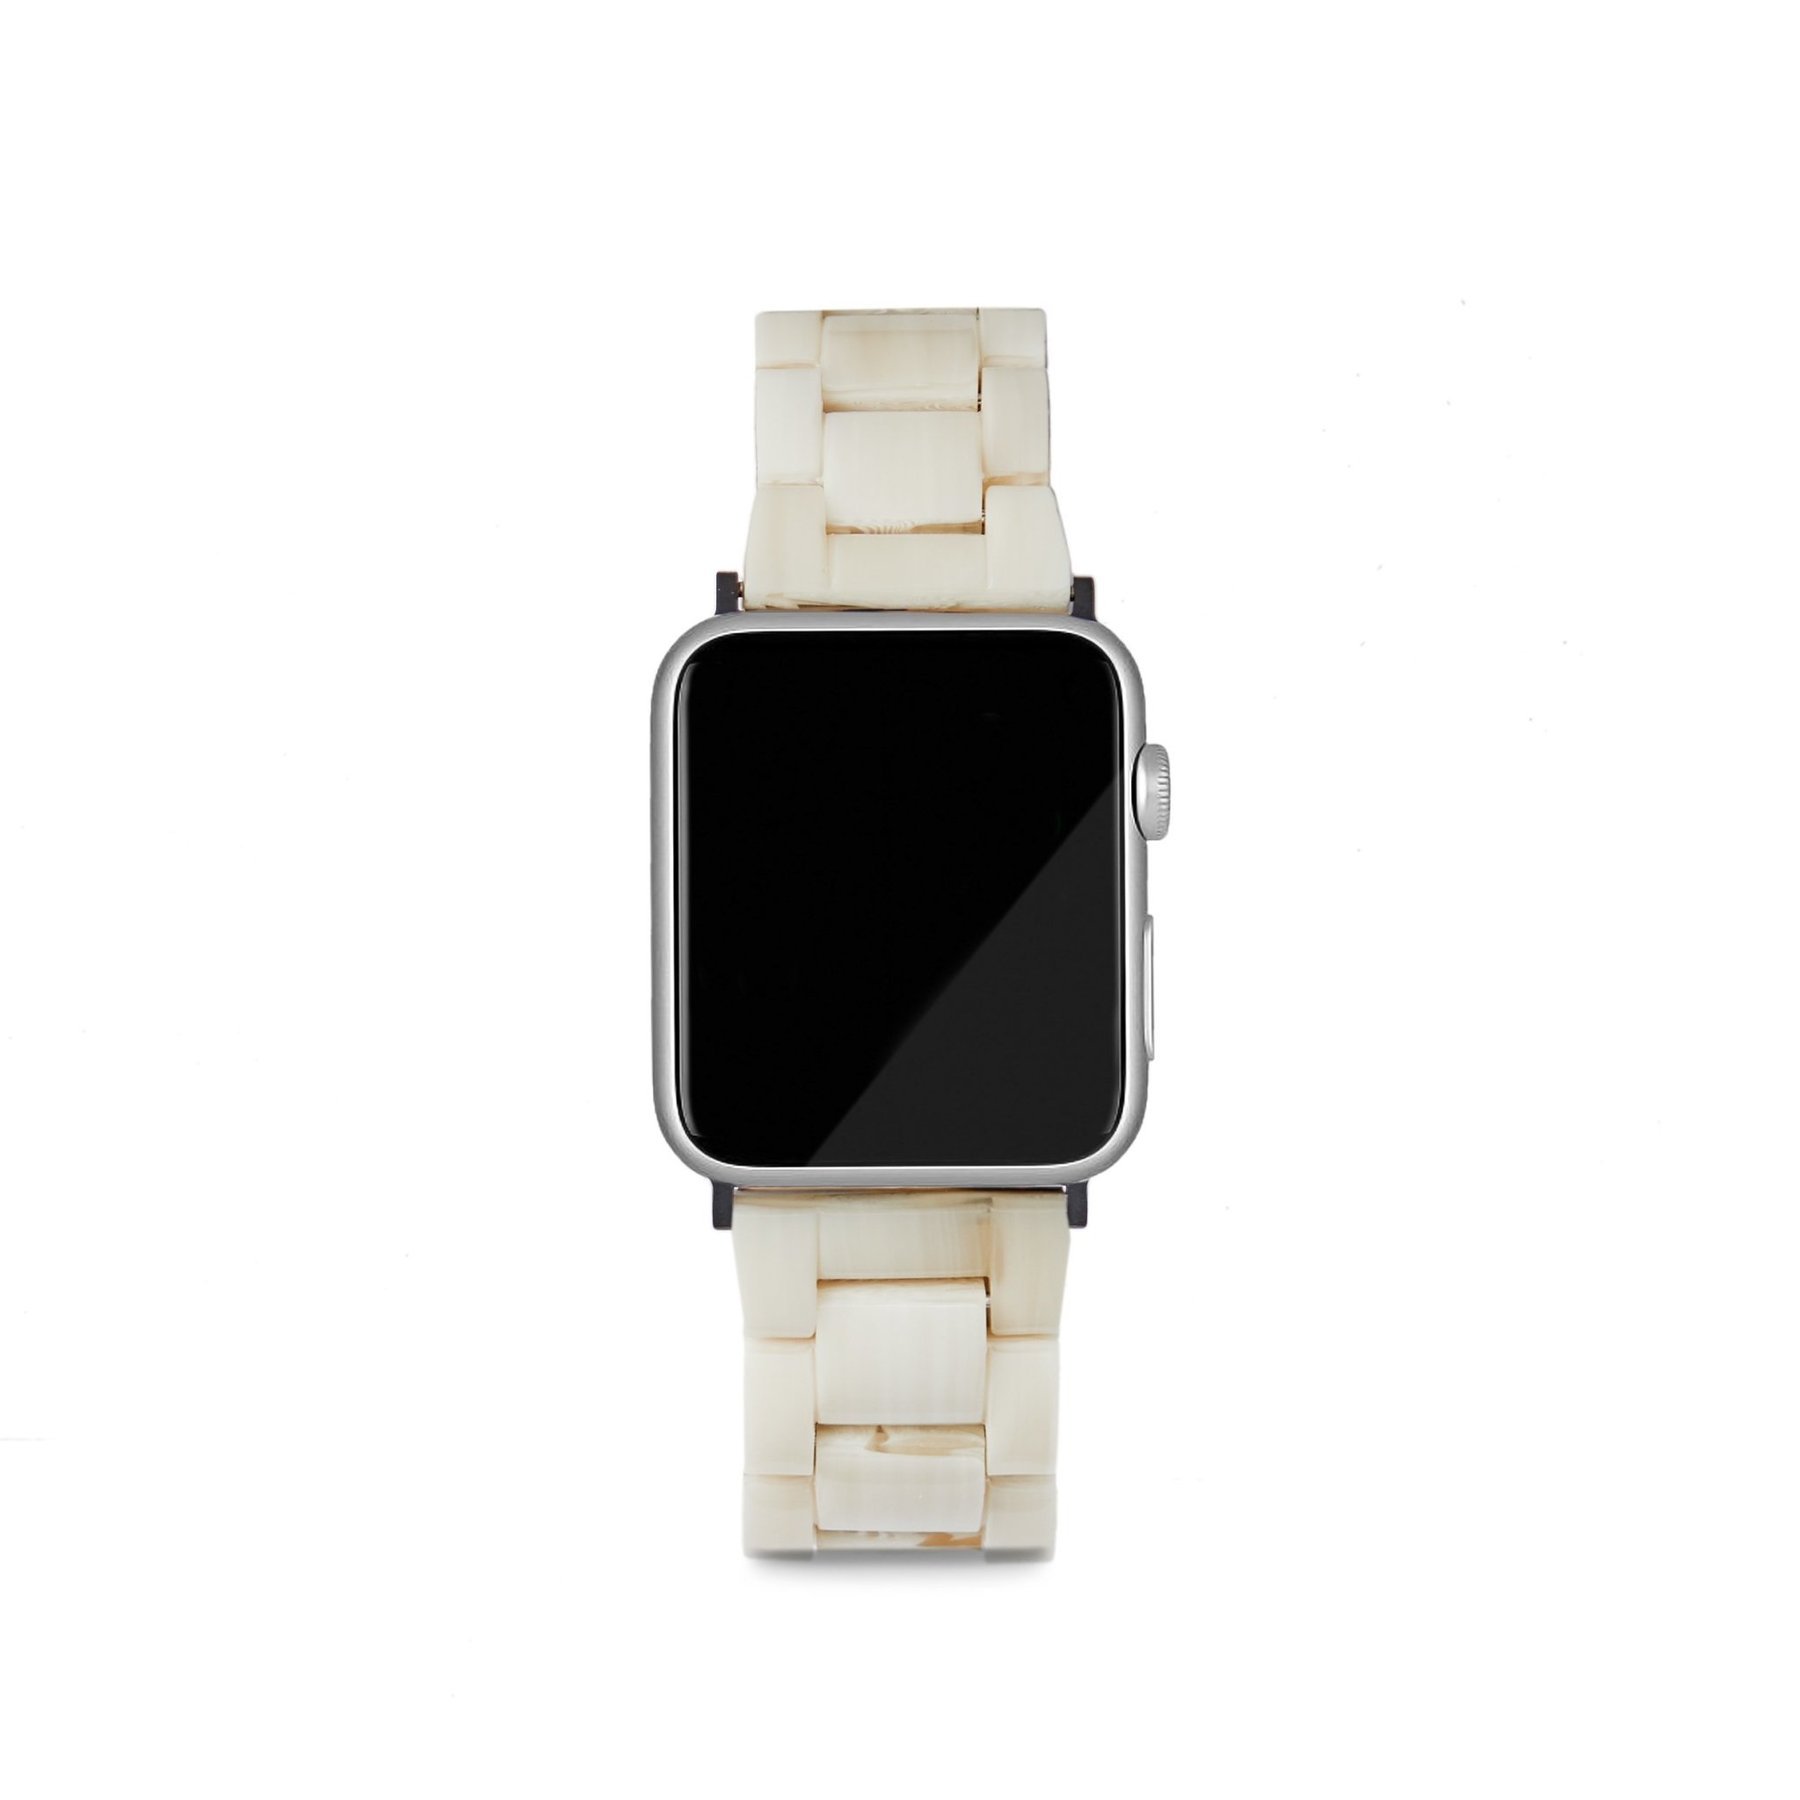 Machete Apple Watch Bands